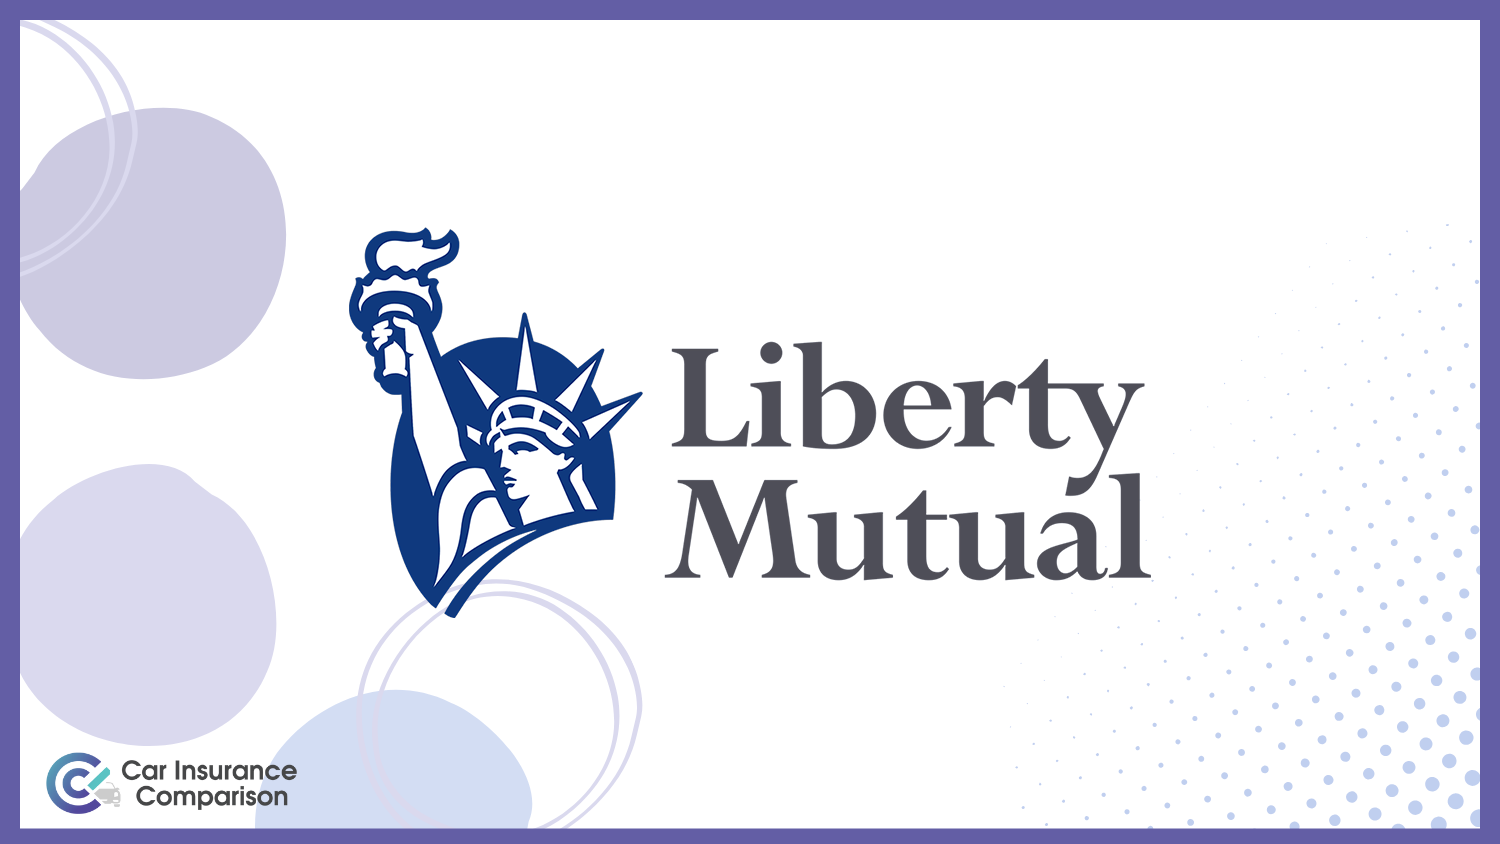 Best Amazon Flex Delivery Car Insurance: Liberty Mutual